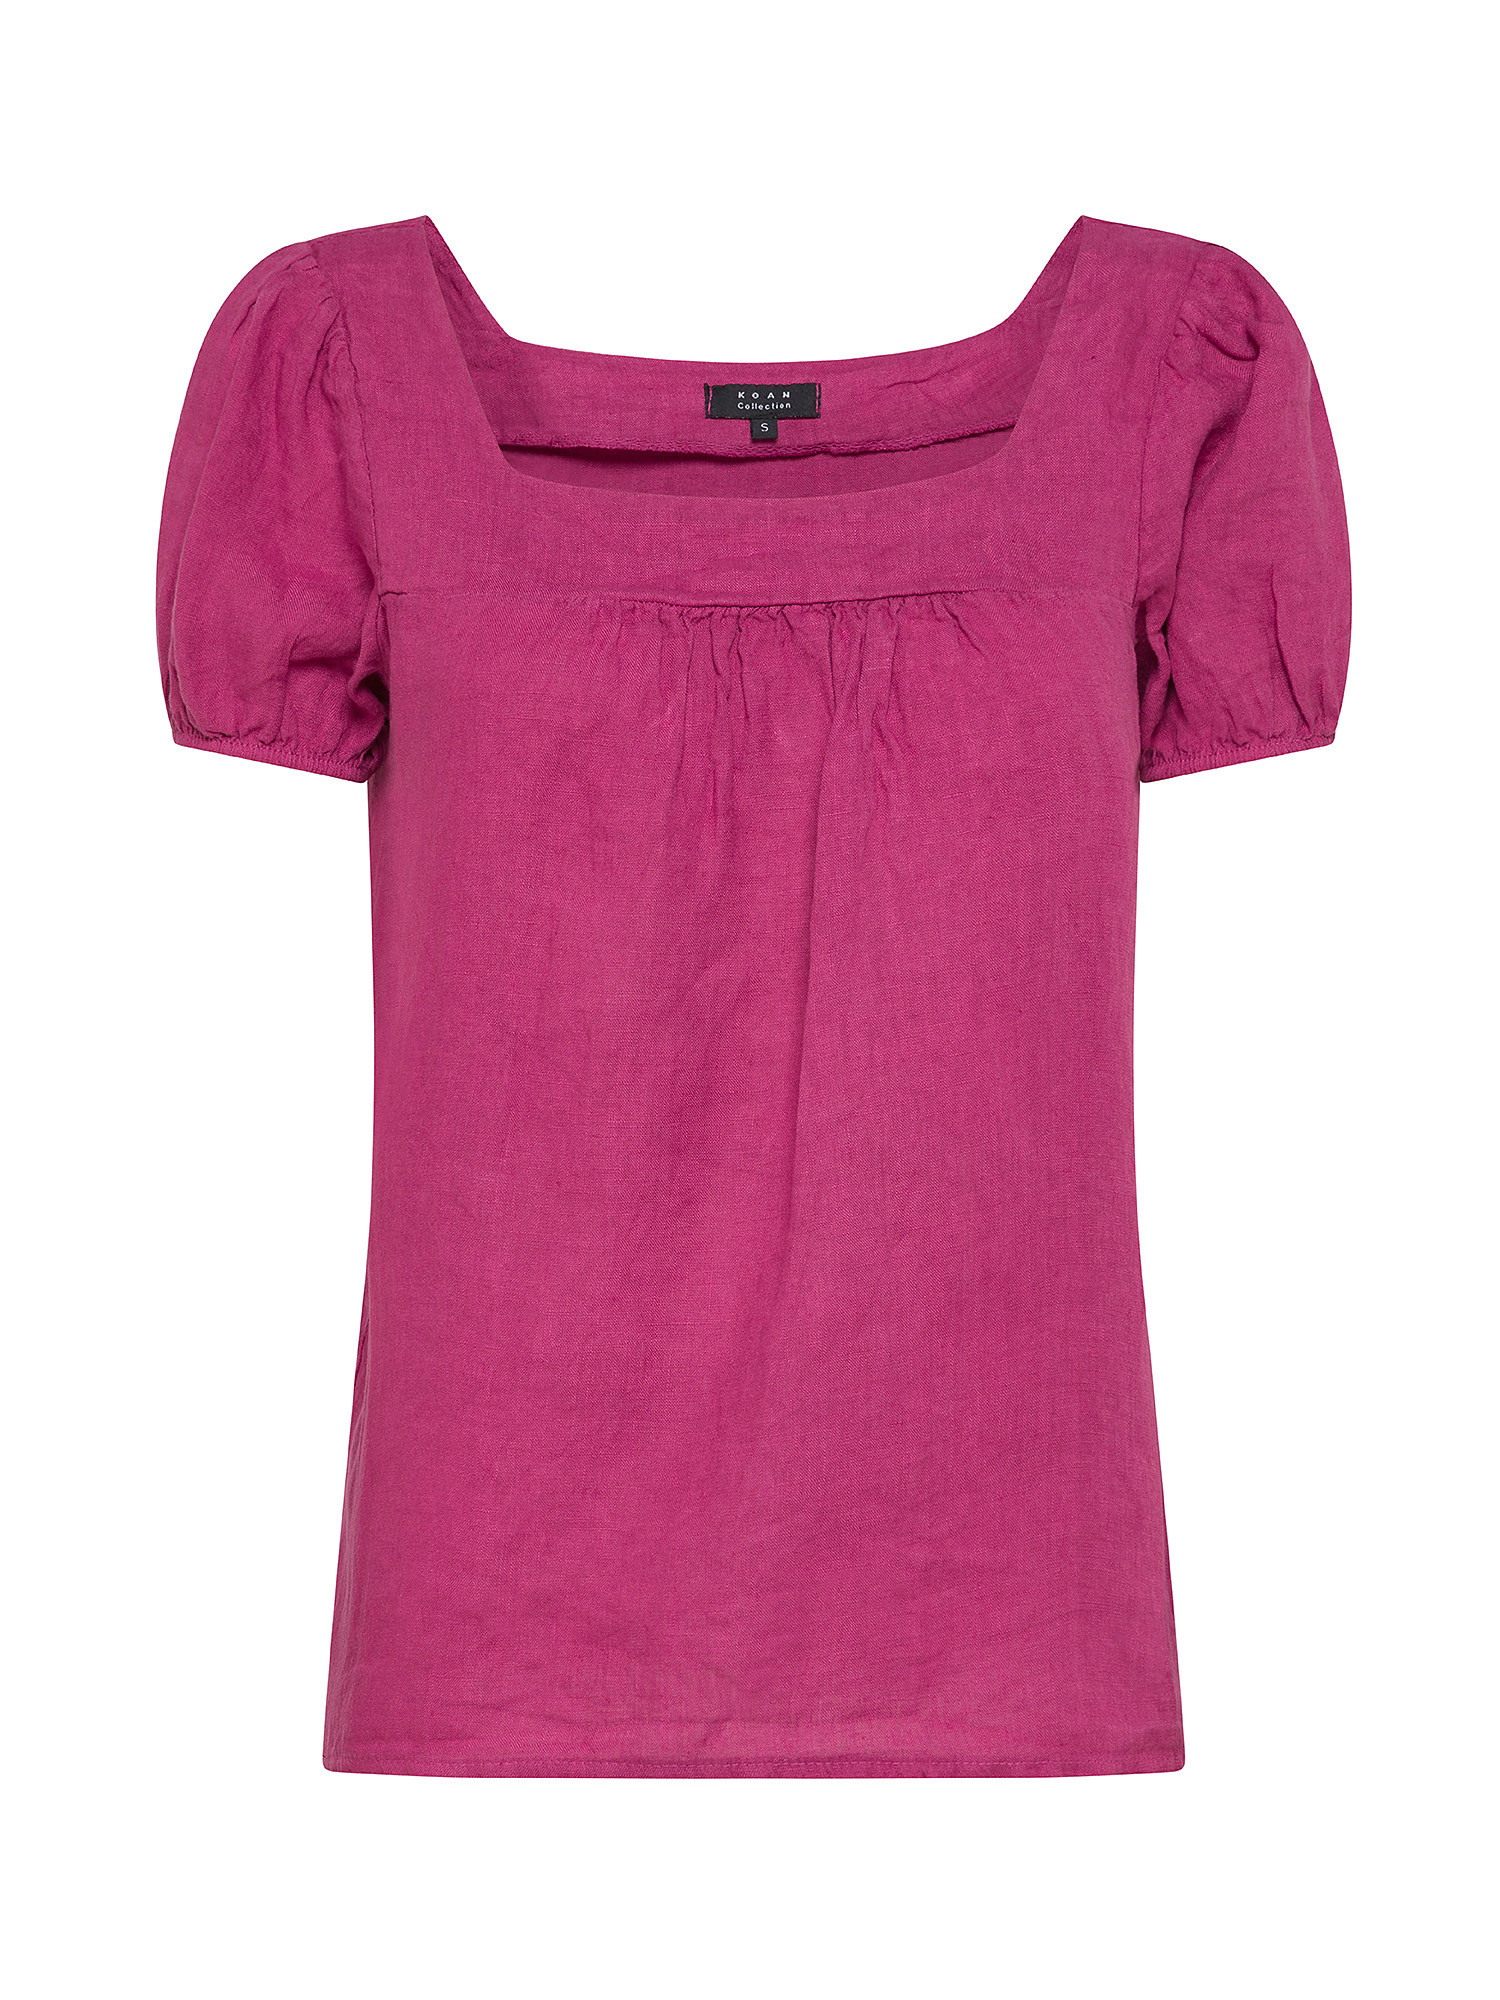 Koan - Linen blouse, Pink, large image number 0